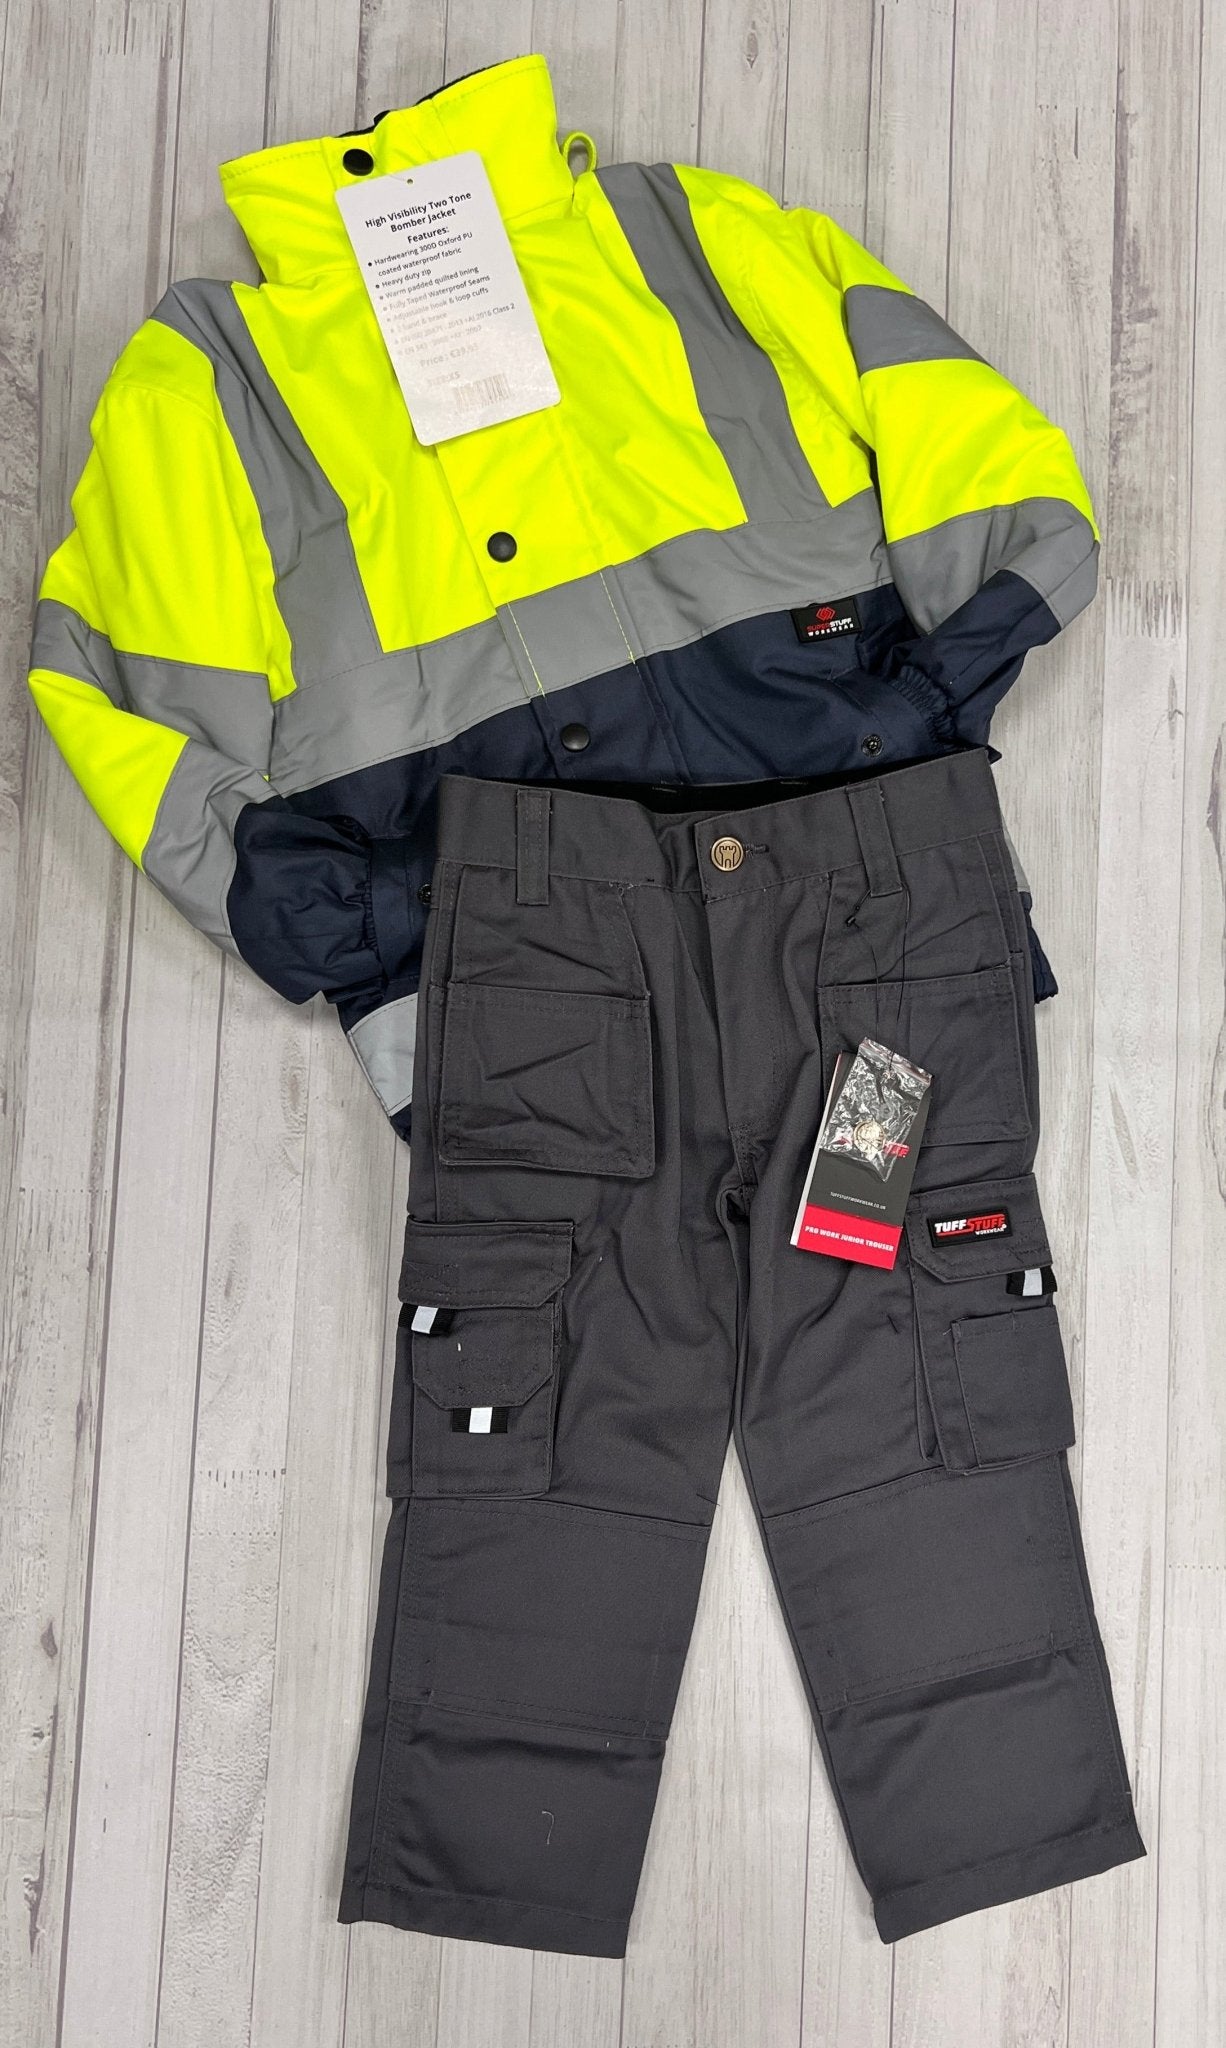 Kids Hi-Vis Jacket (Yellow) & Work Trouser (Grey) - Bundle - GLS Clothing